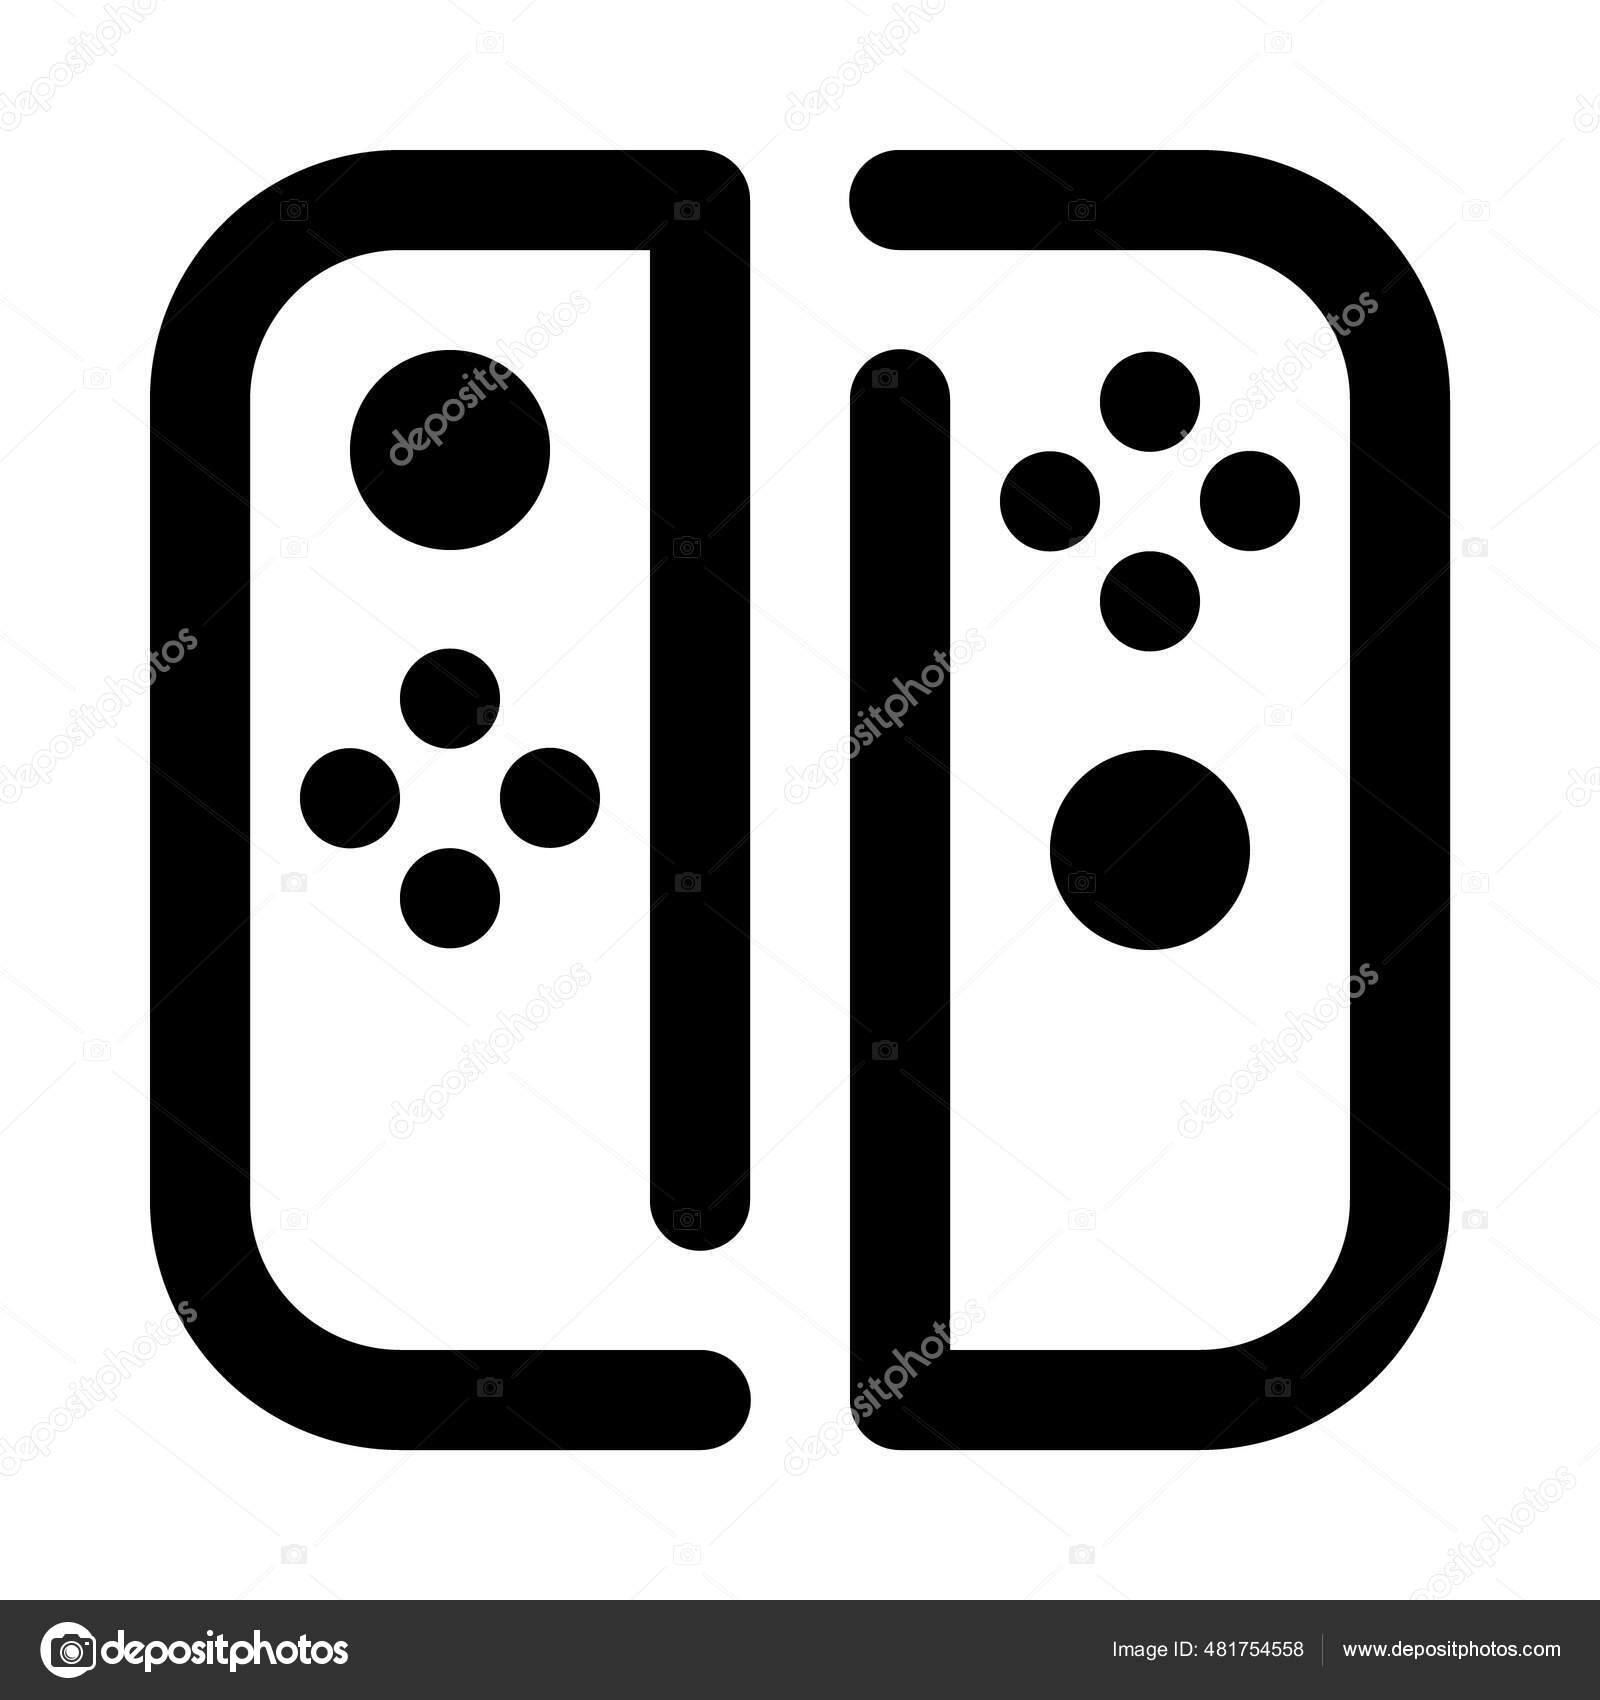 Nintendo switch symbol Stock-Vektorbilder | Depositphotos